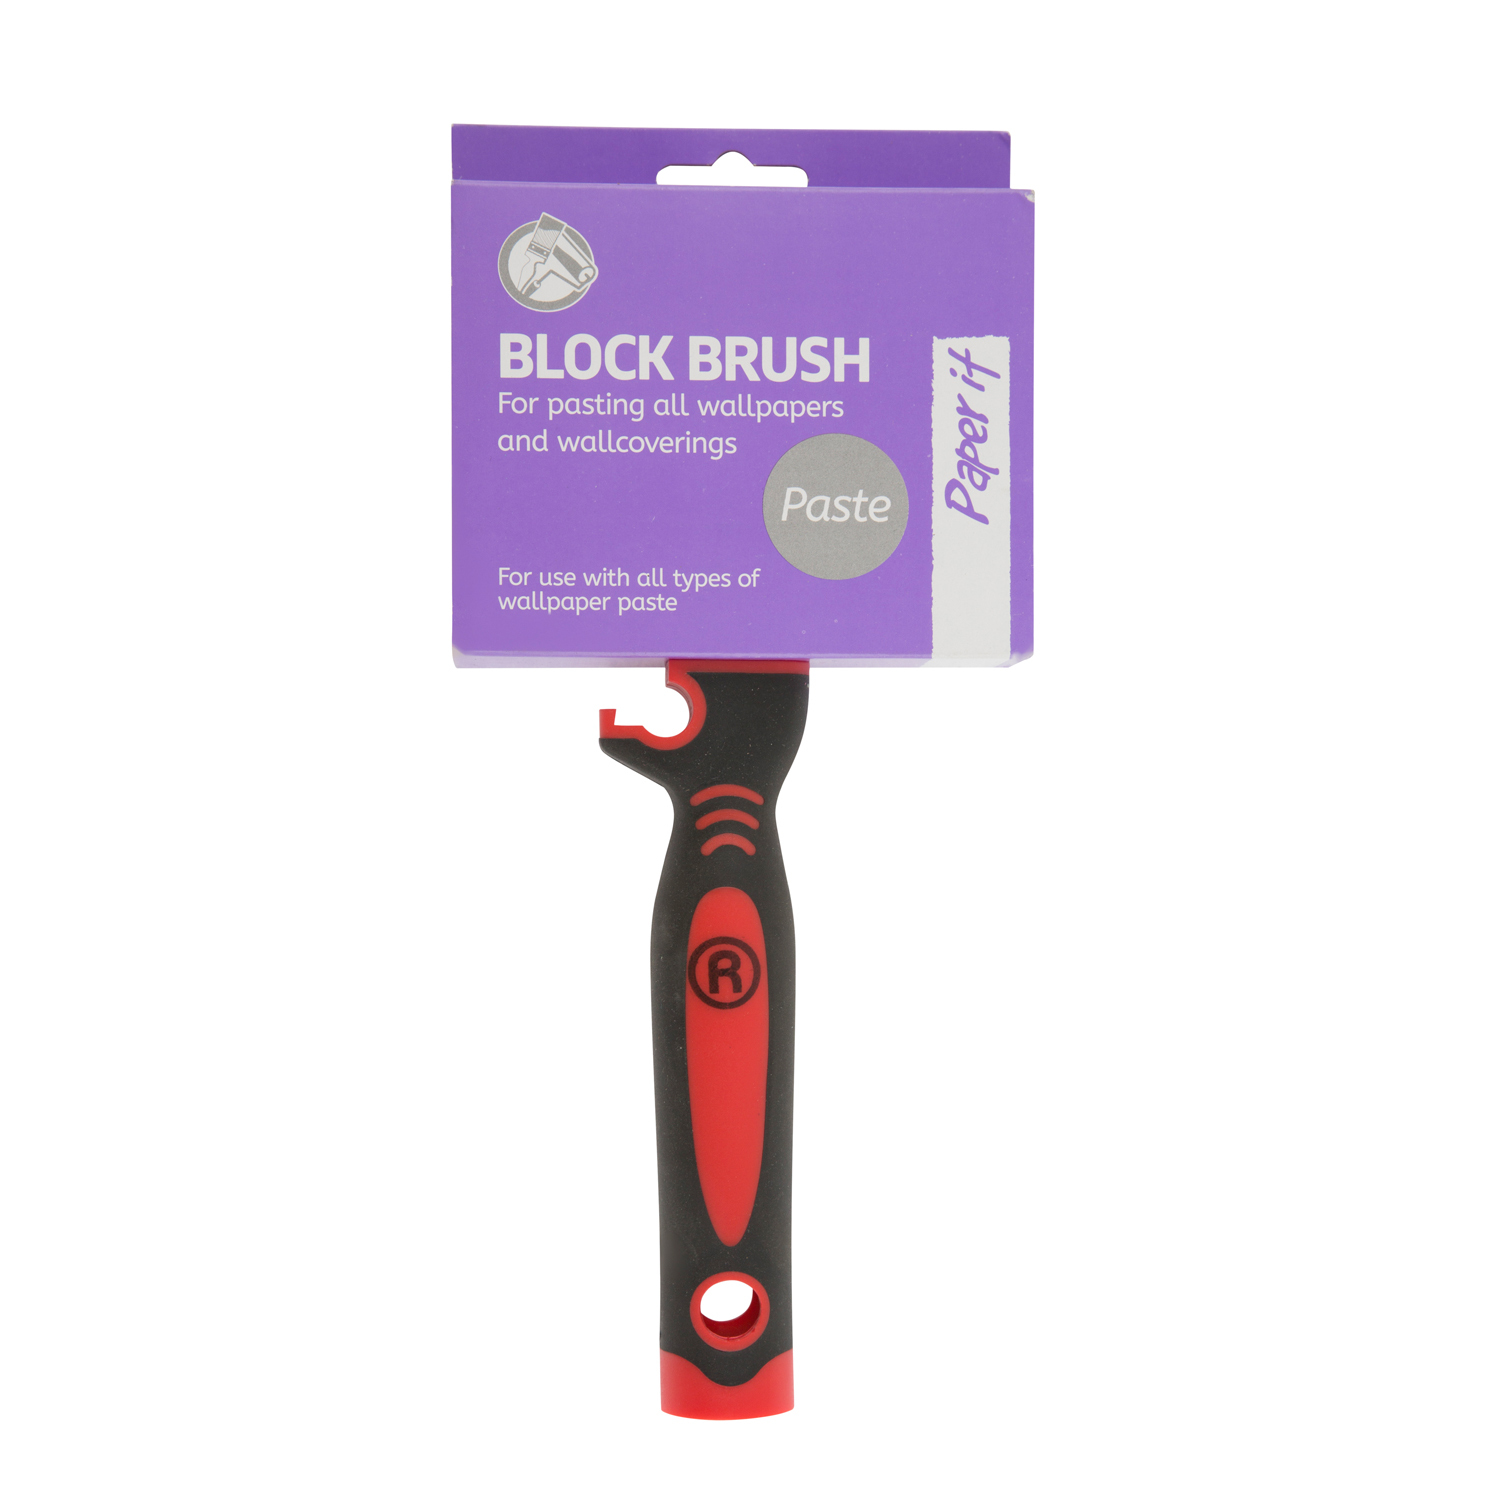 Block Brush Paste Image